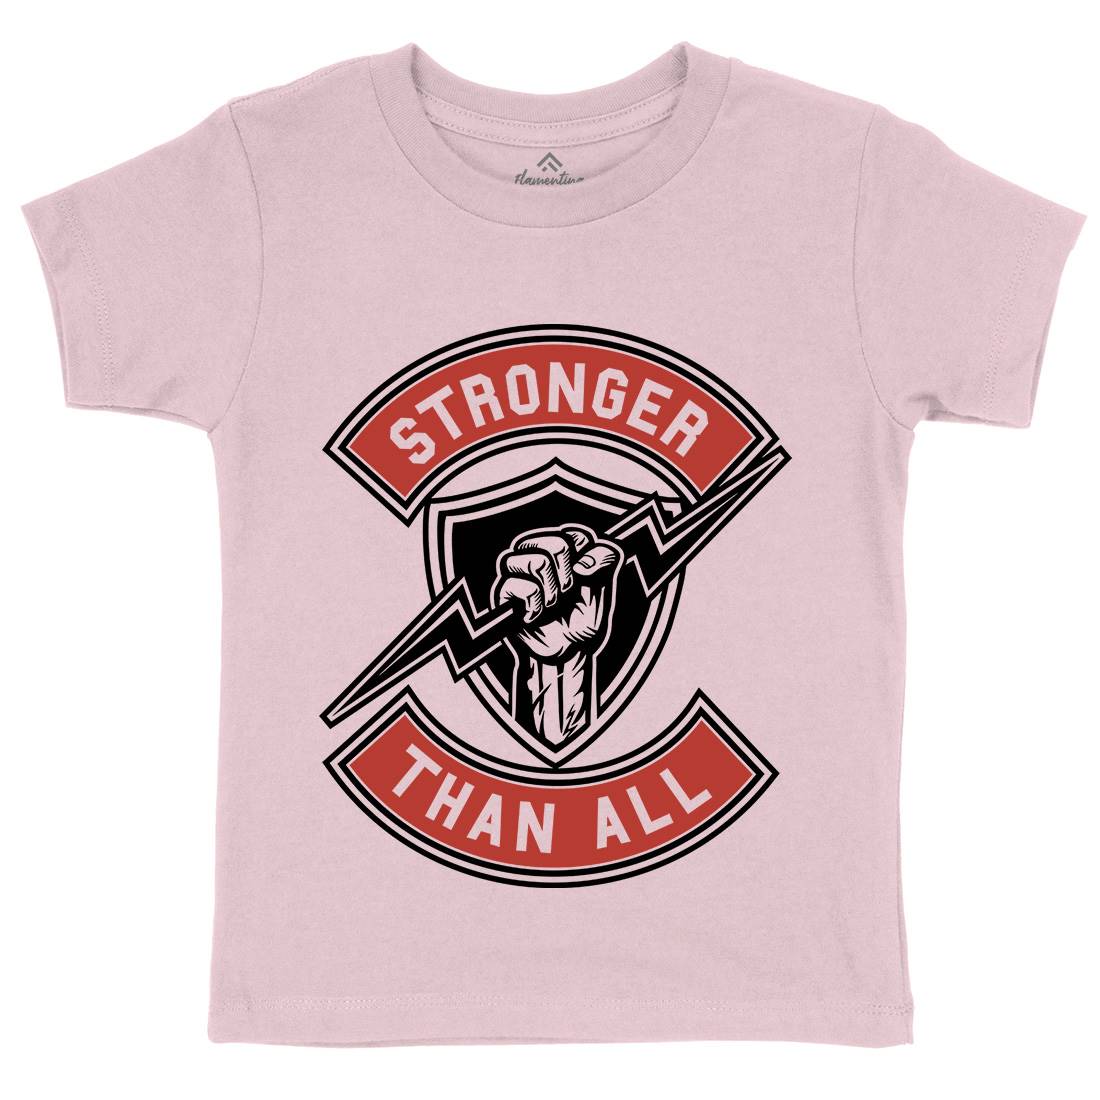 Stronger Than All Kids Crew Neck T-Shirt Gym A290